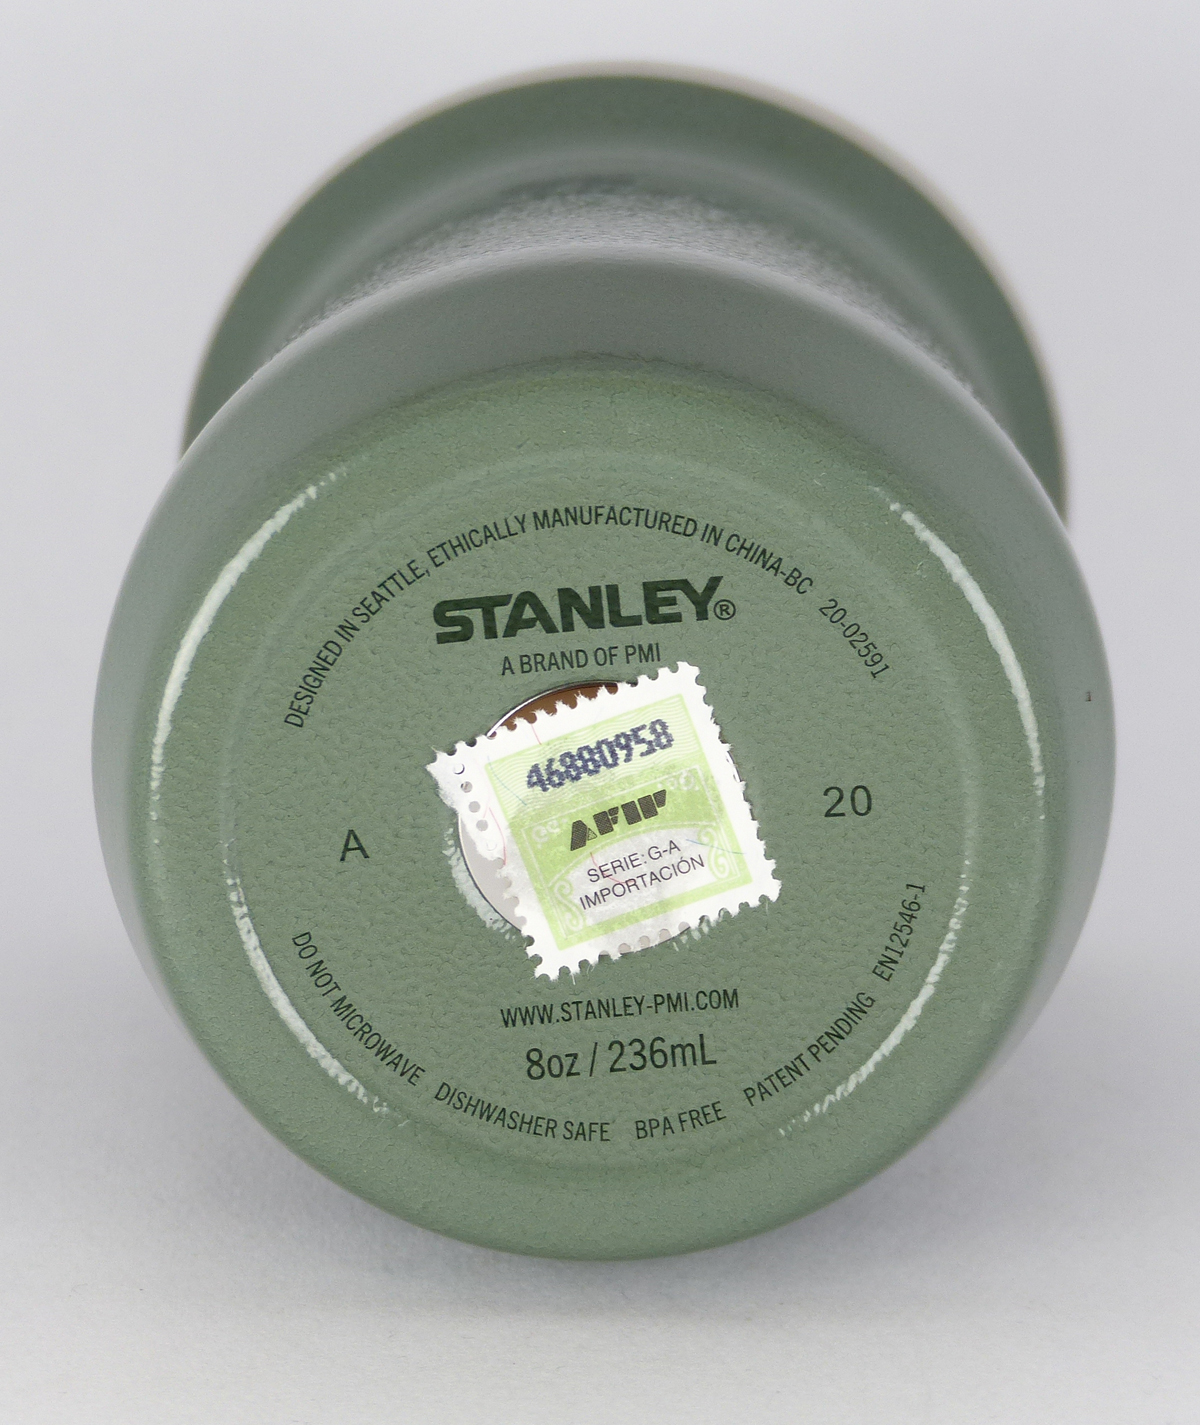 Mate de Acero Stanley Stainless Steel Yerba Mate Cup Original Color -  Argenthings